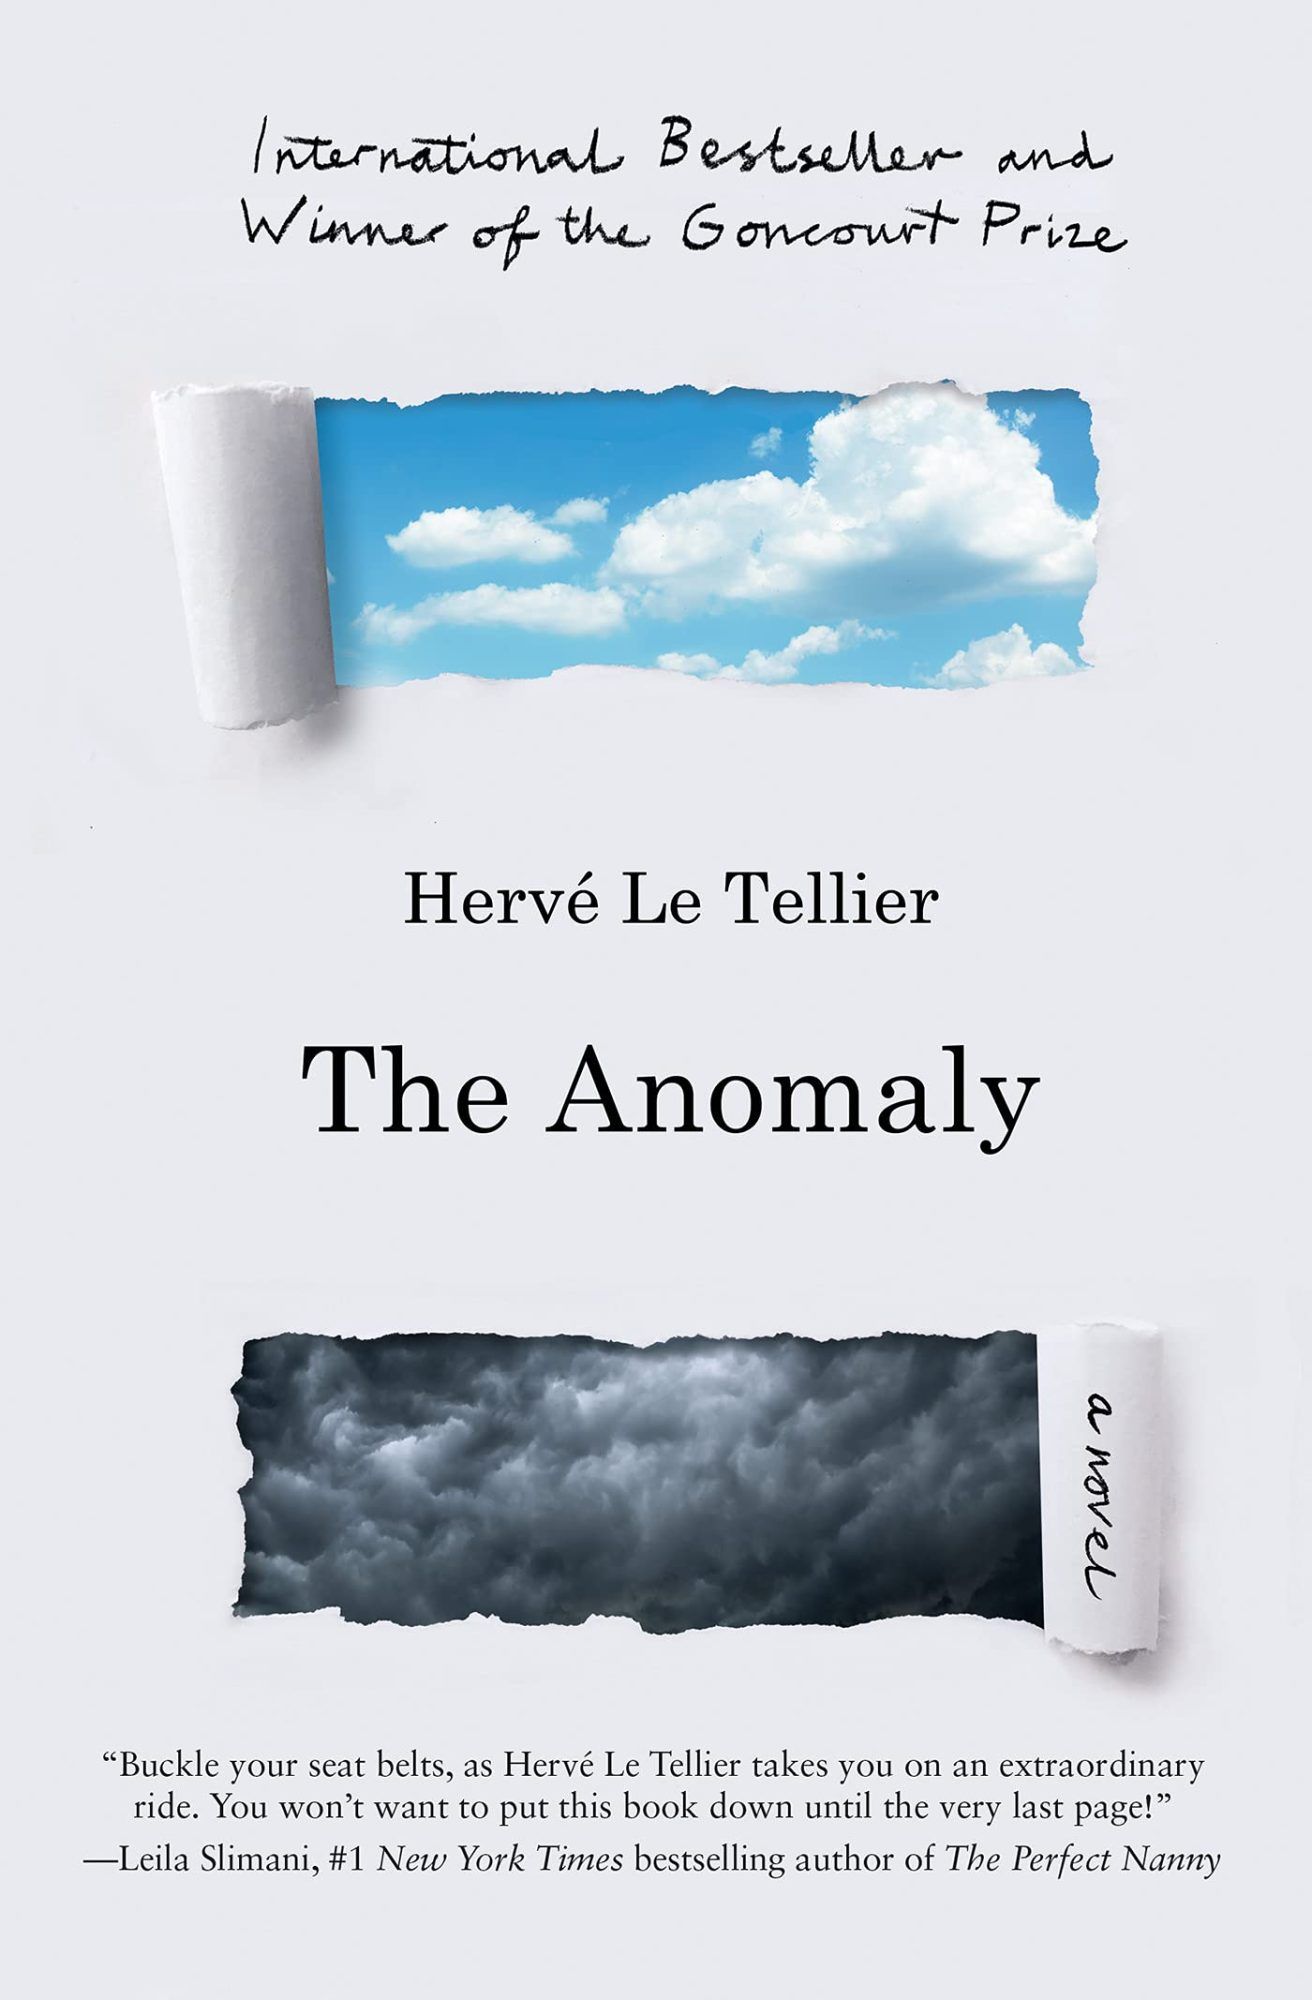 Naslovnica knjige Anomalija Hervea Le Telliera